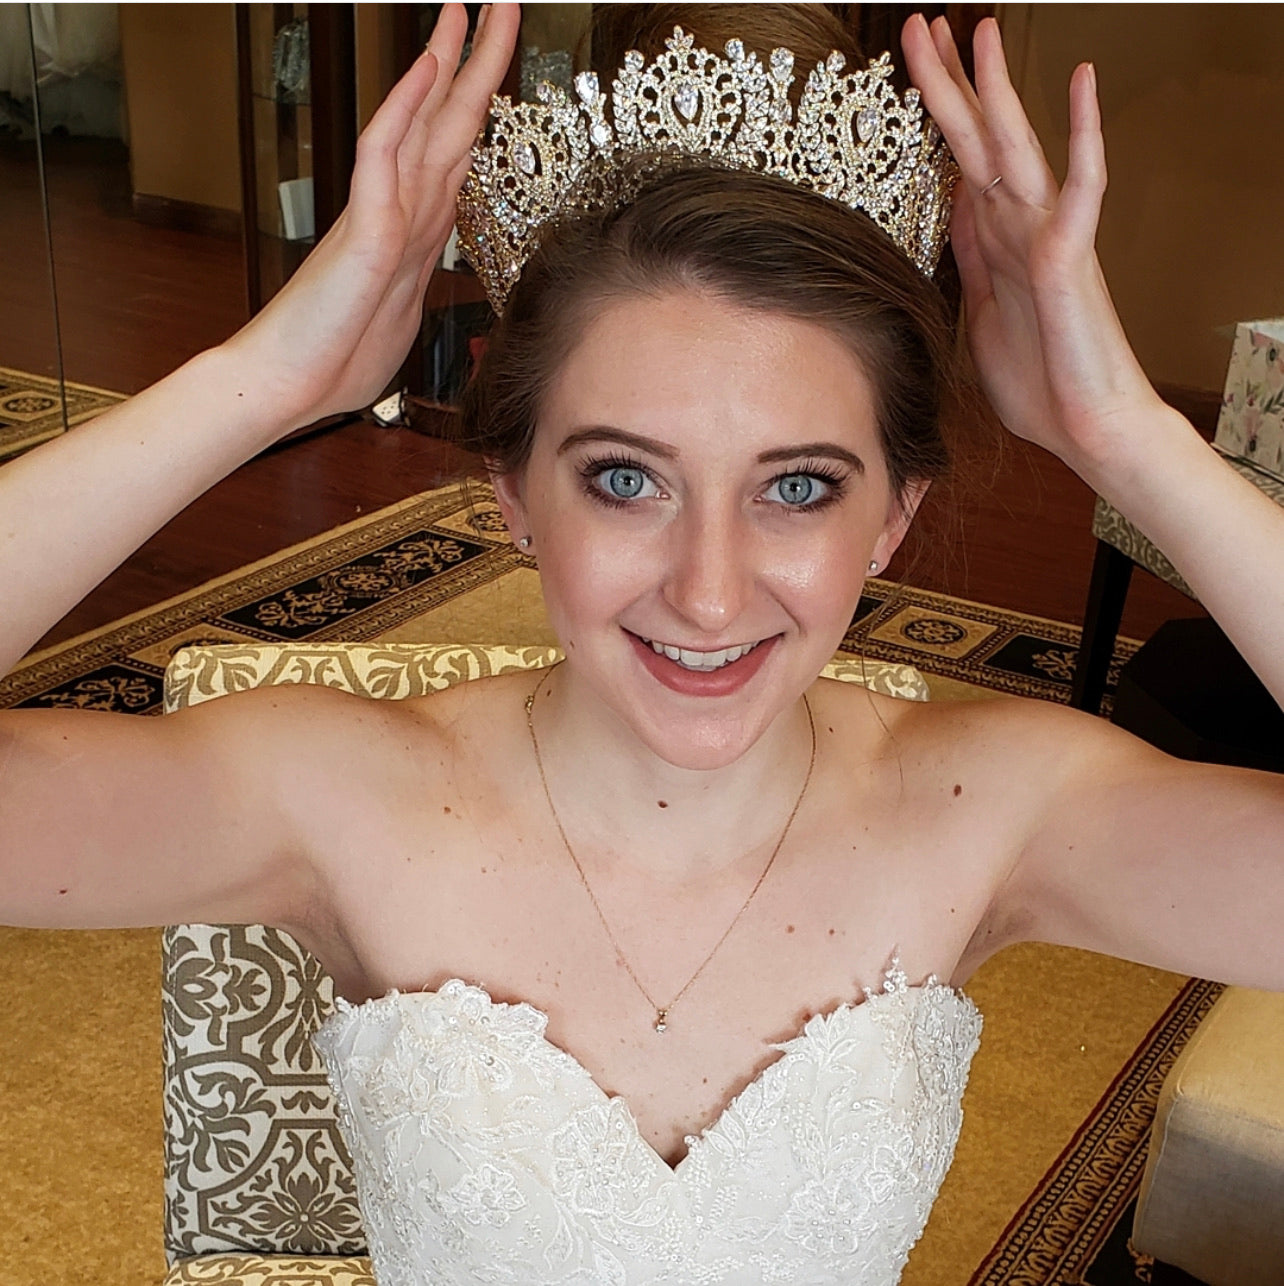 ANGELIKA Bridal Crown with Swarovski Crystals & Stunning Design